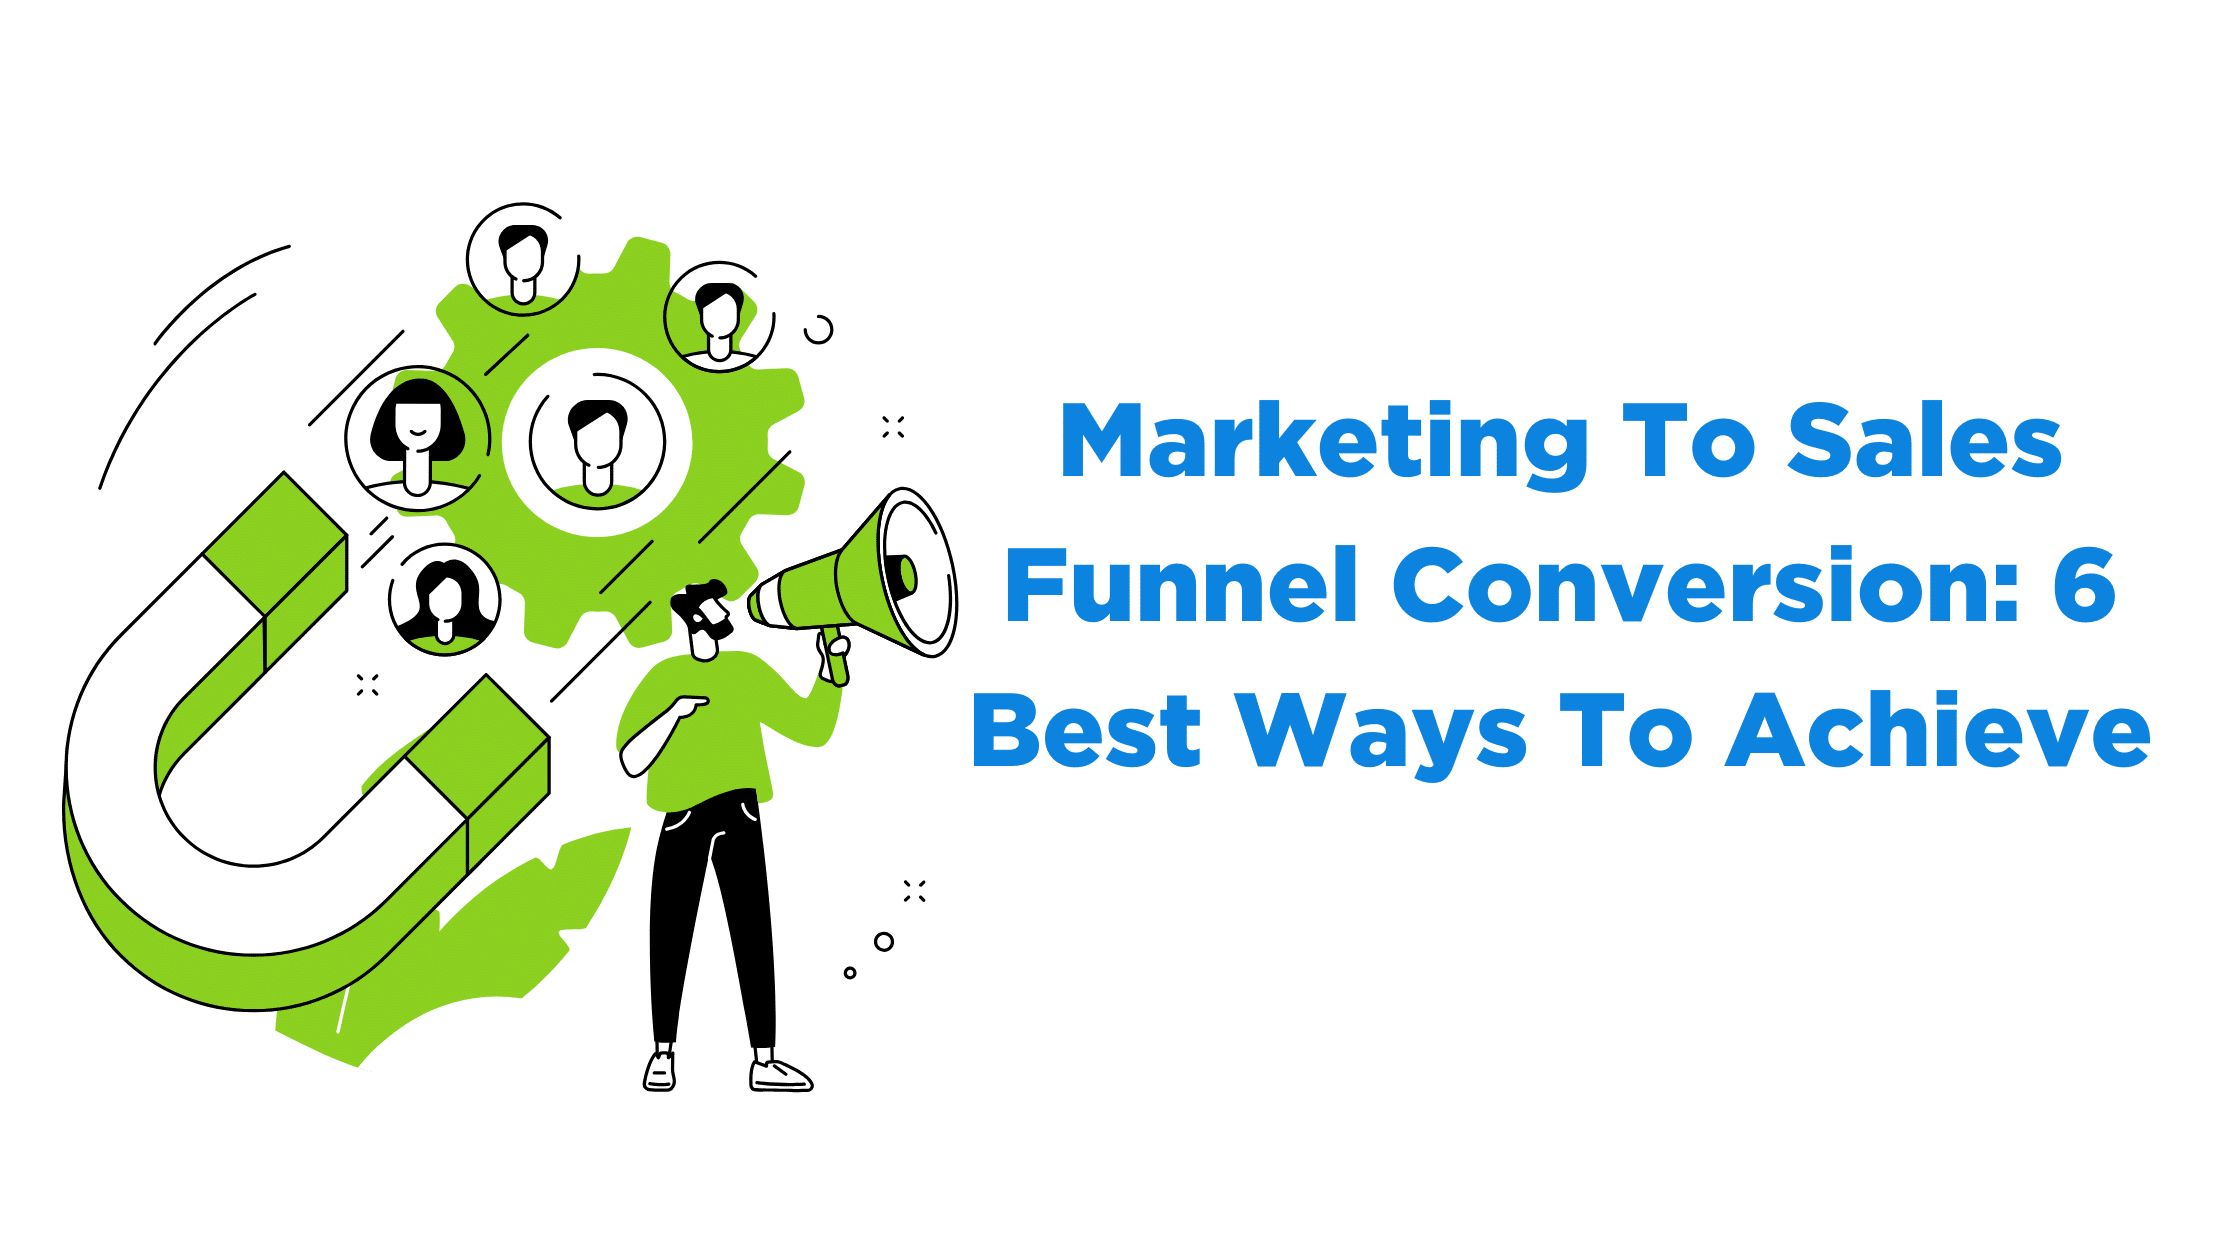 Marketing To Sales Funnel Conversion: 6 Best Ways To Achieve